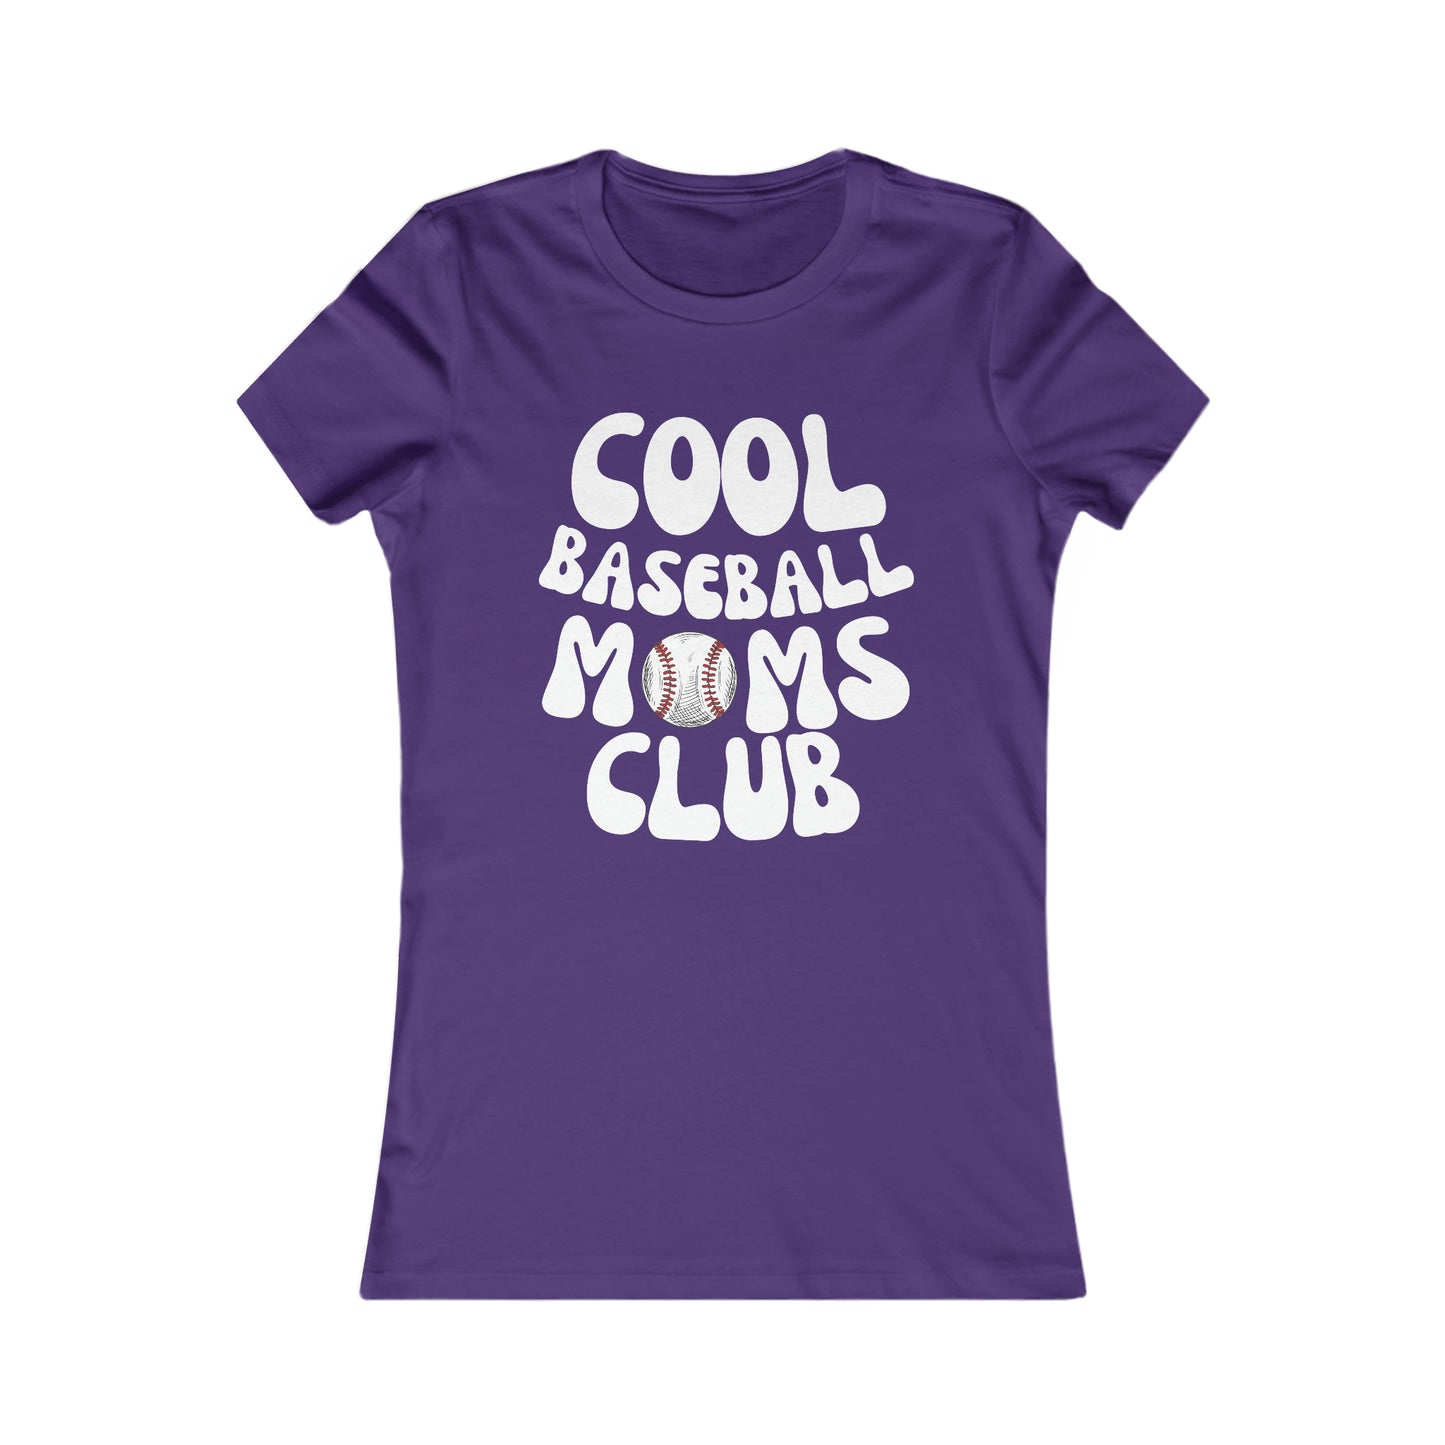 Cool Baseball Mom's Club - Women's Favorite Tee